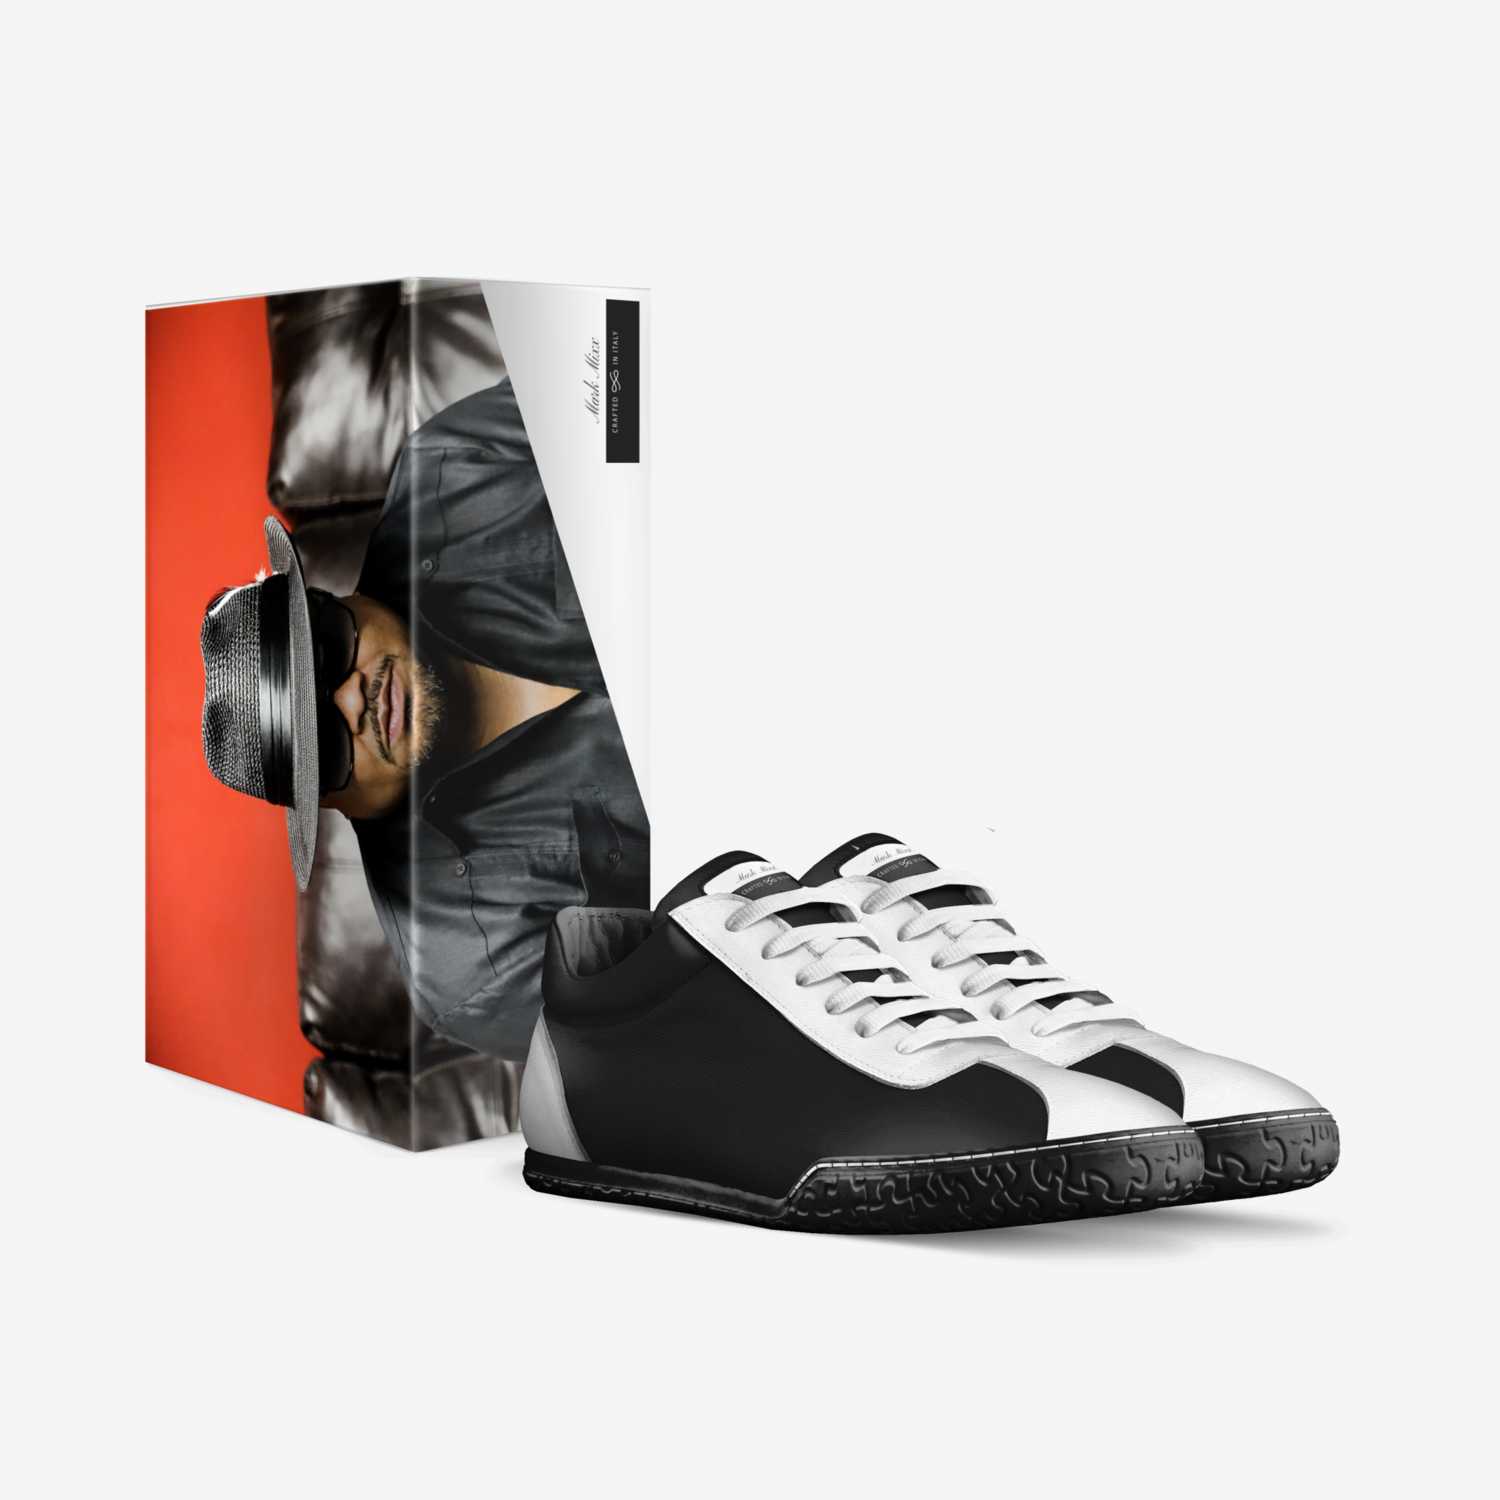 Mark Mixx custom made in Italy shoes by Jamon Gibbs | Box view